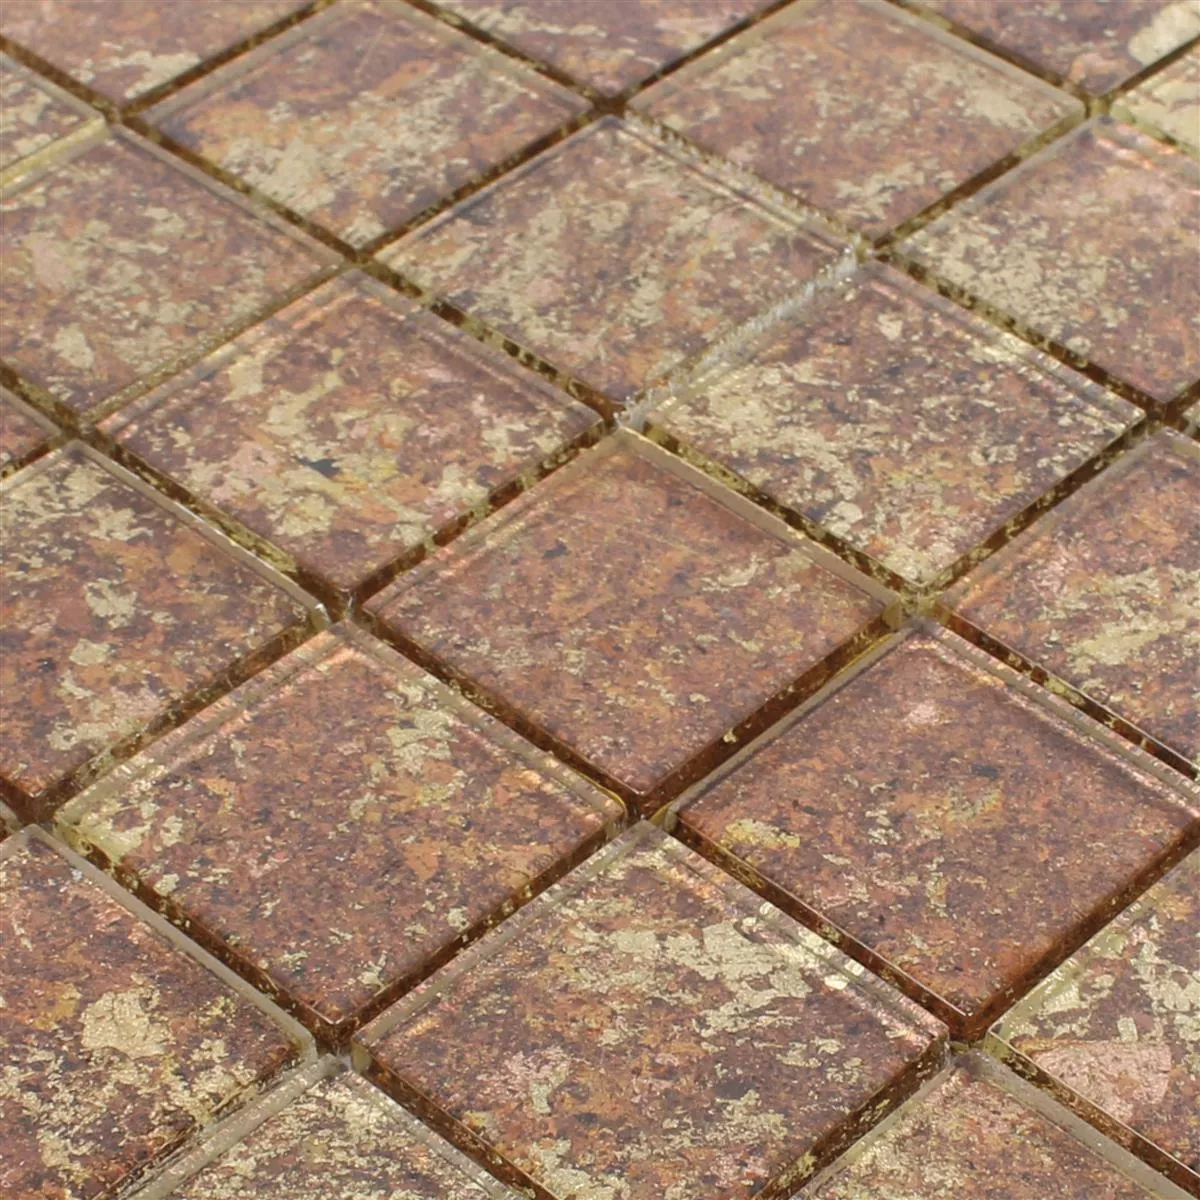 Sample Glass Mosaic Tiles Pueblo Rustic Yellow Orange